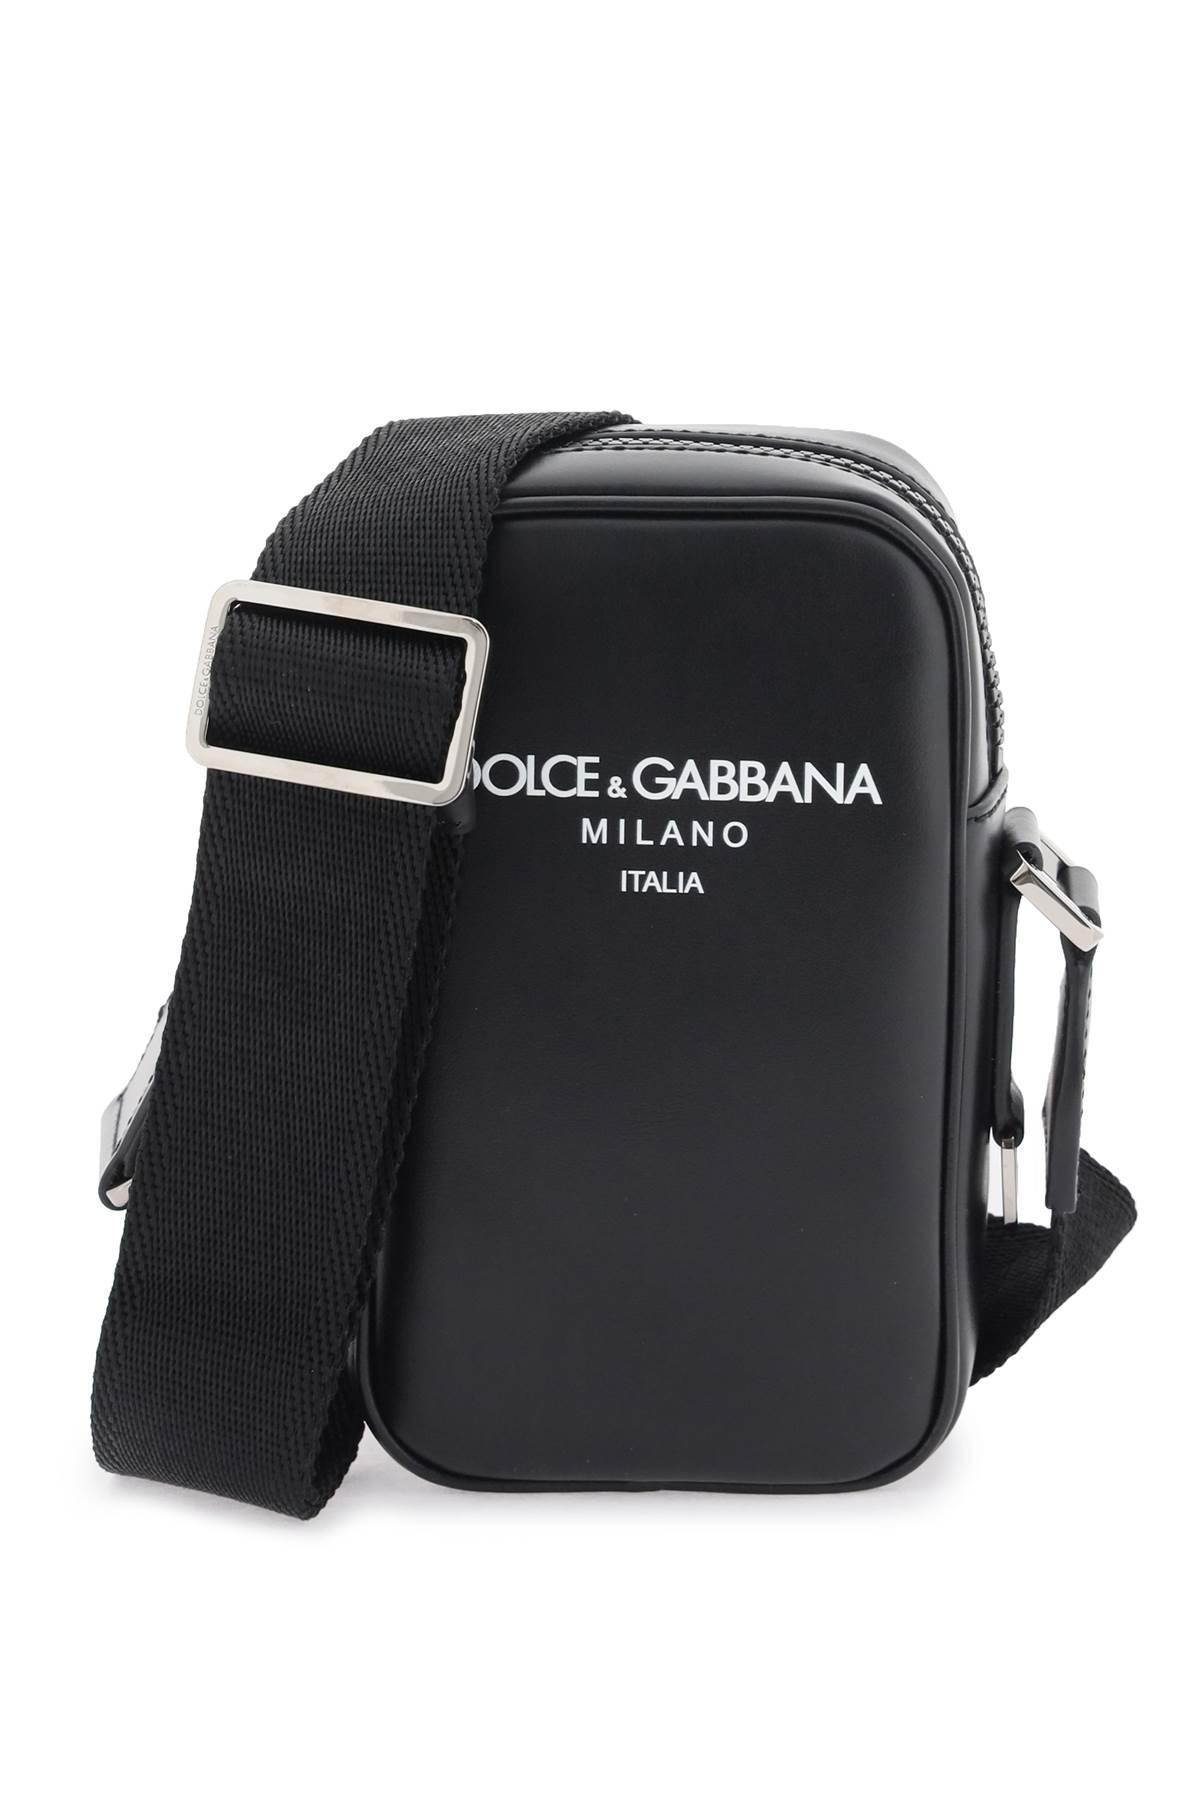 Dolce & Gabbana Small Leather Crossbody Bag in Black for Men